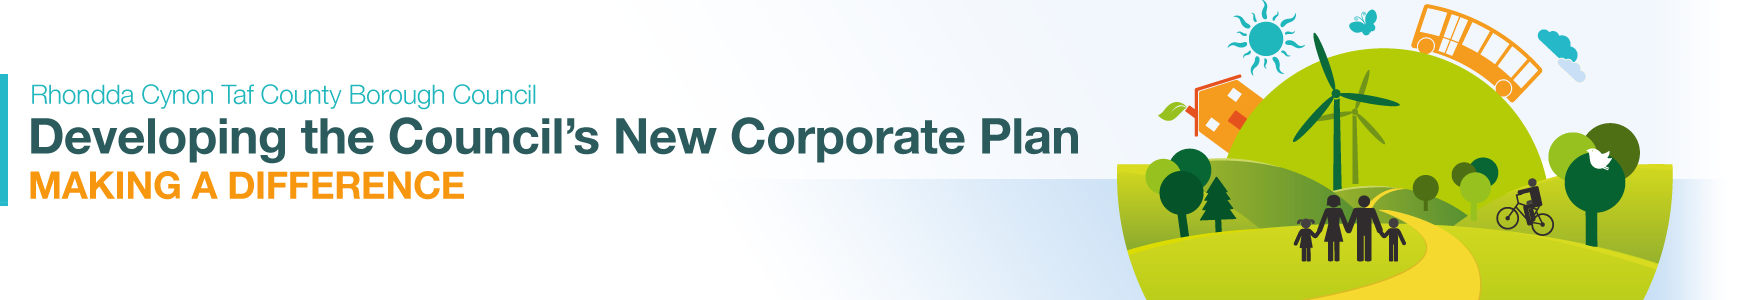 Corp-Plan-Header